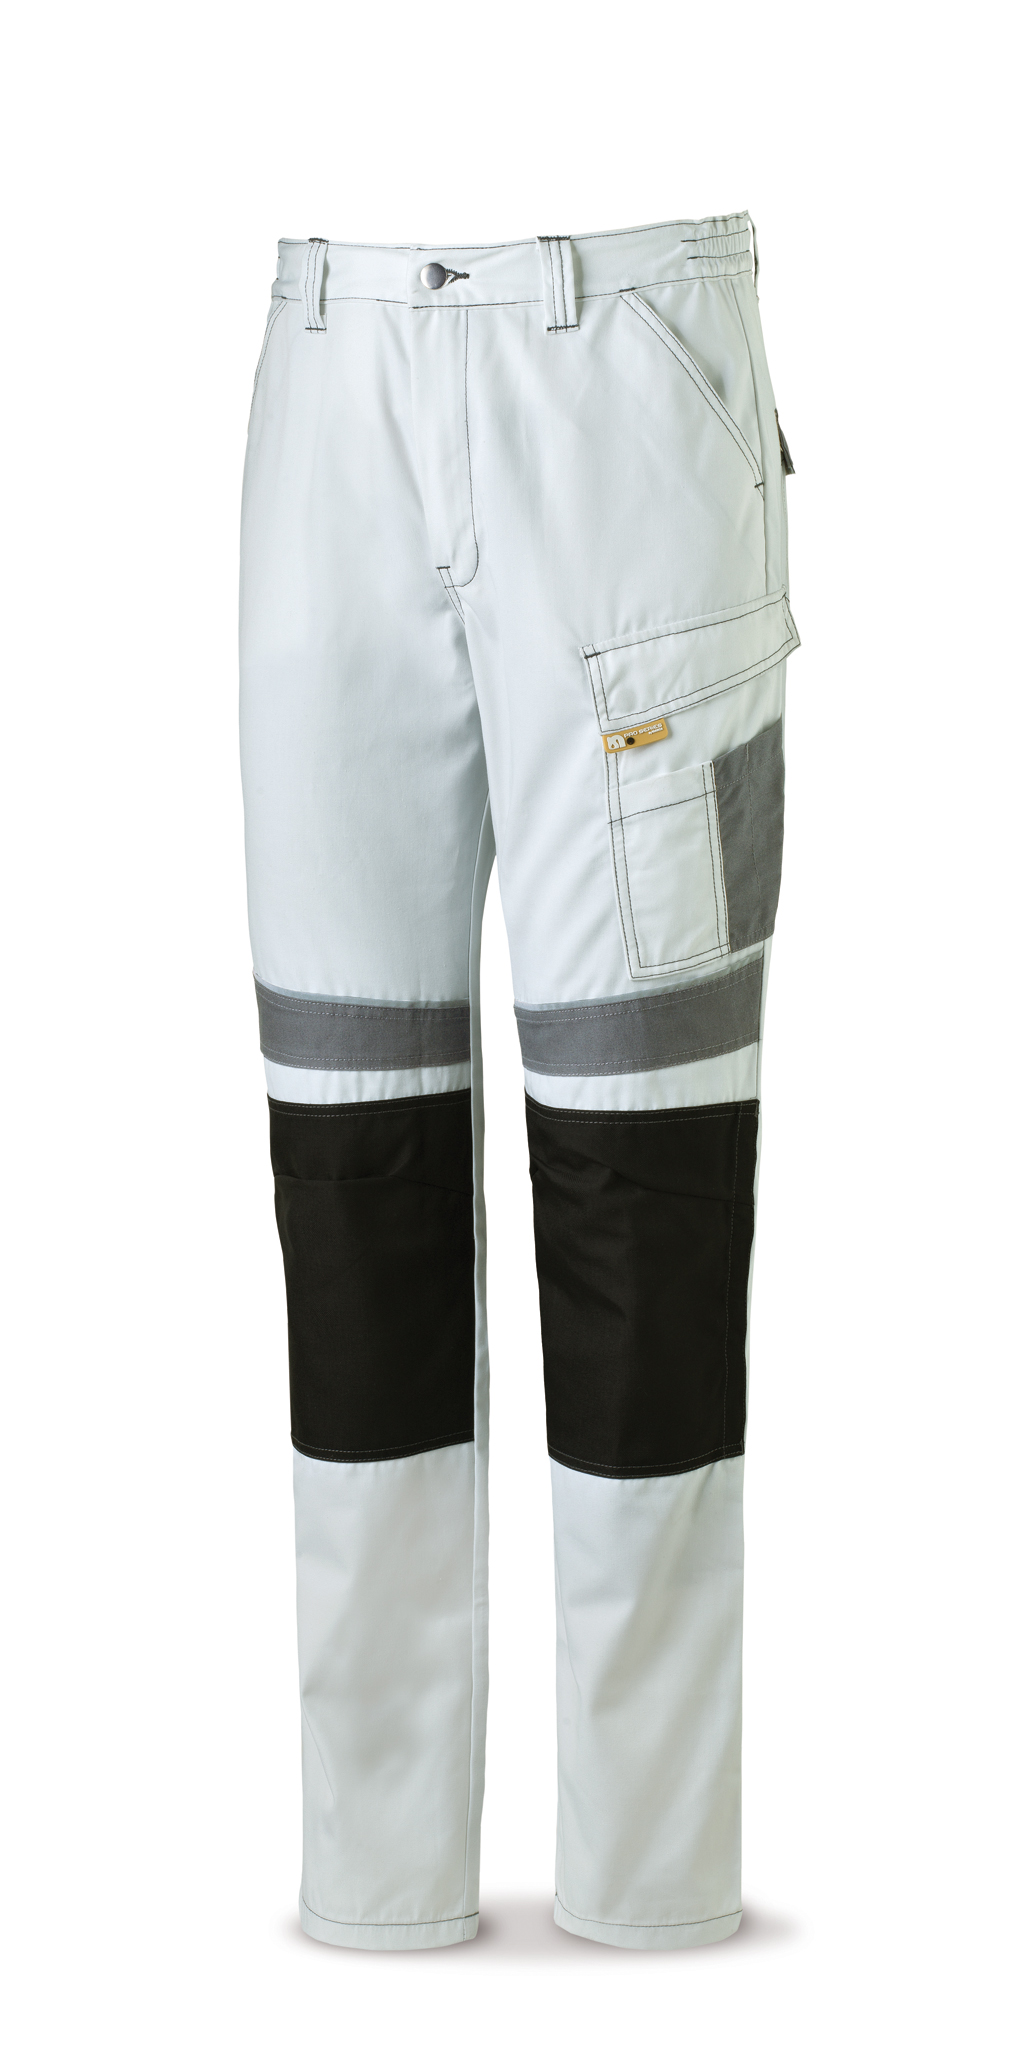 588-PBG Vestuario Laboral Pro Series Pantalón CANVAS blanco/gris poliéster/algodón 245 g. Multibolsillos